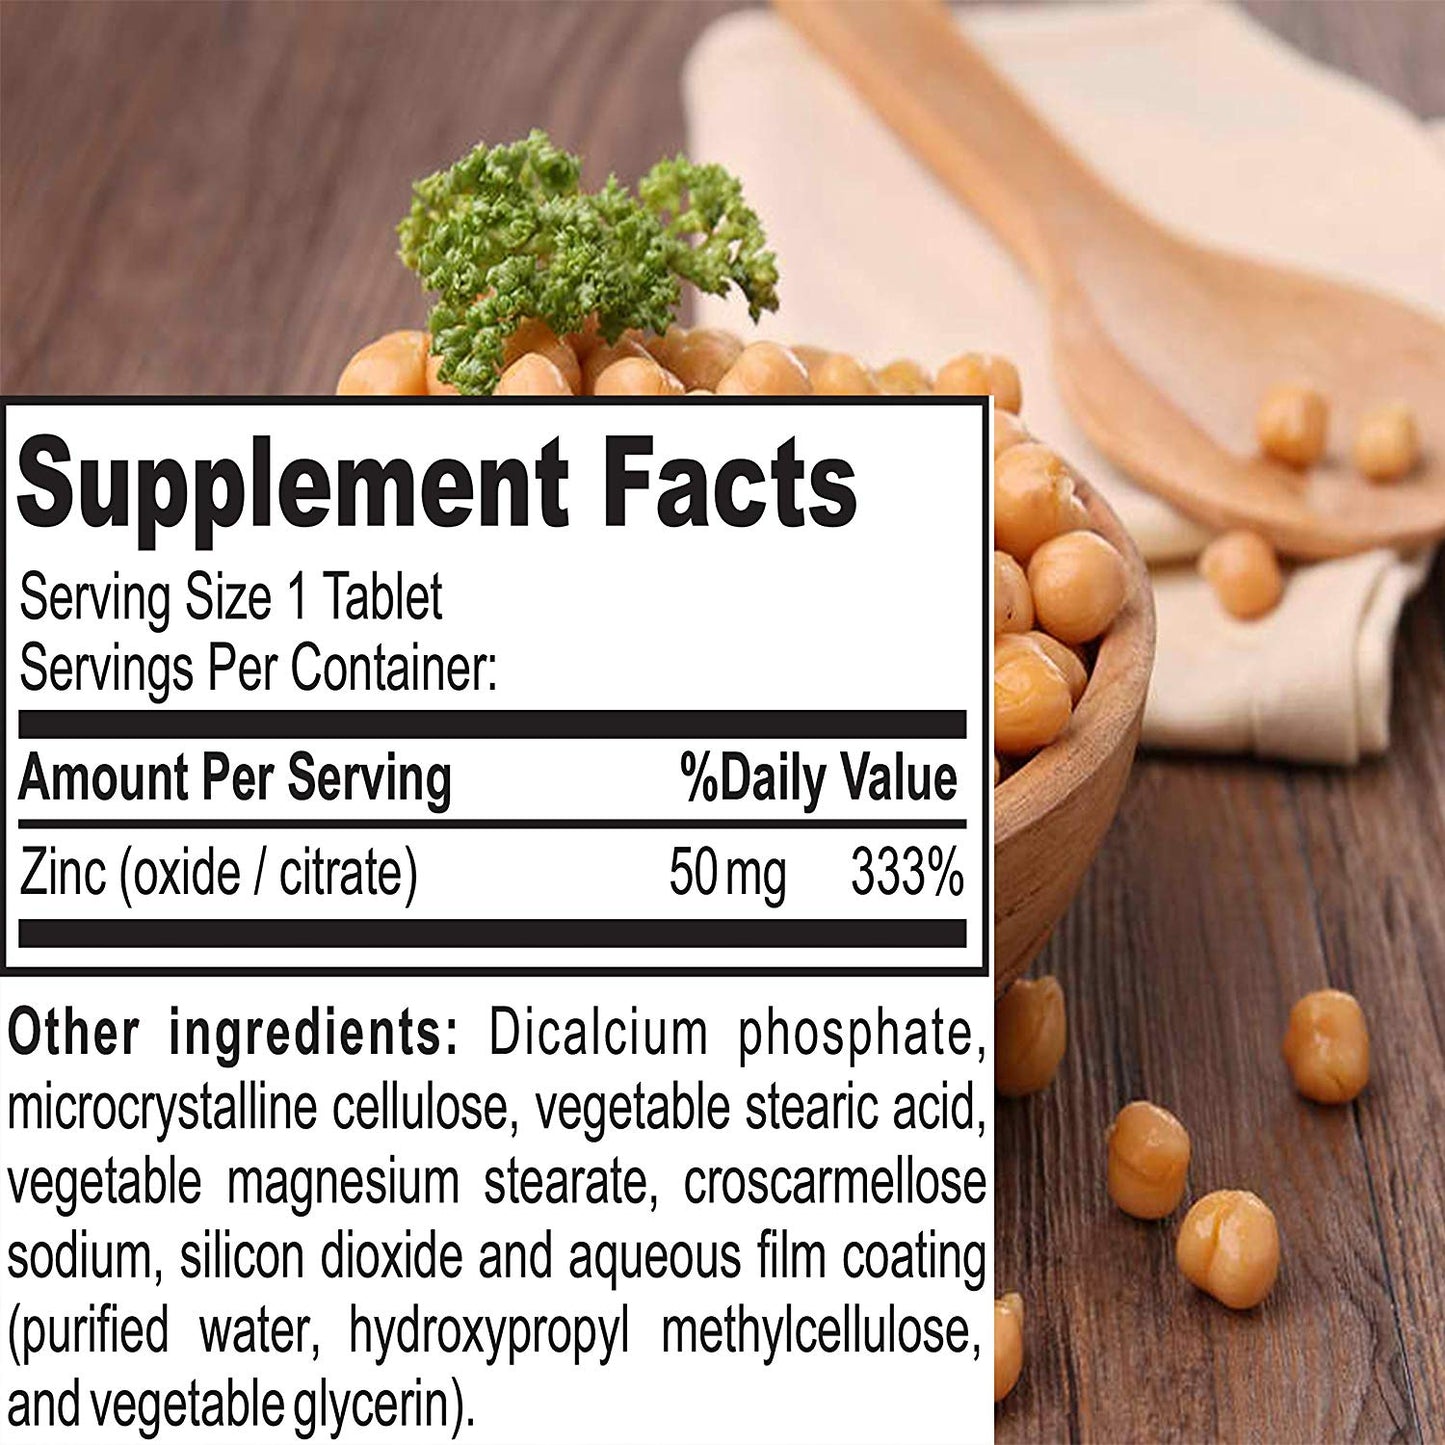 Nature's Potent - Zinc 50mg and Vitamin C1000mg Supplement